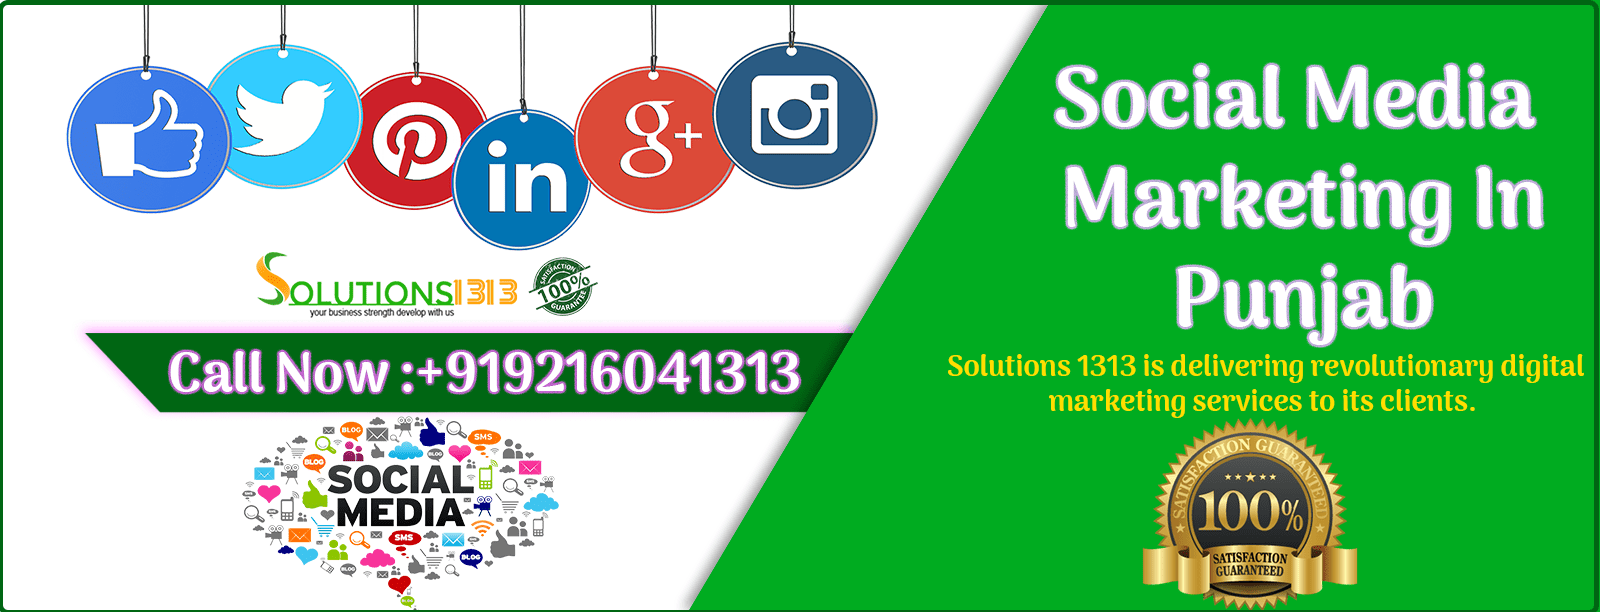 Social Media Marketing Company in Punjab